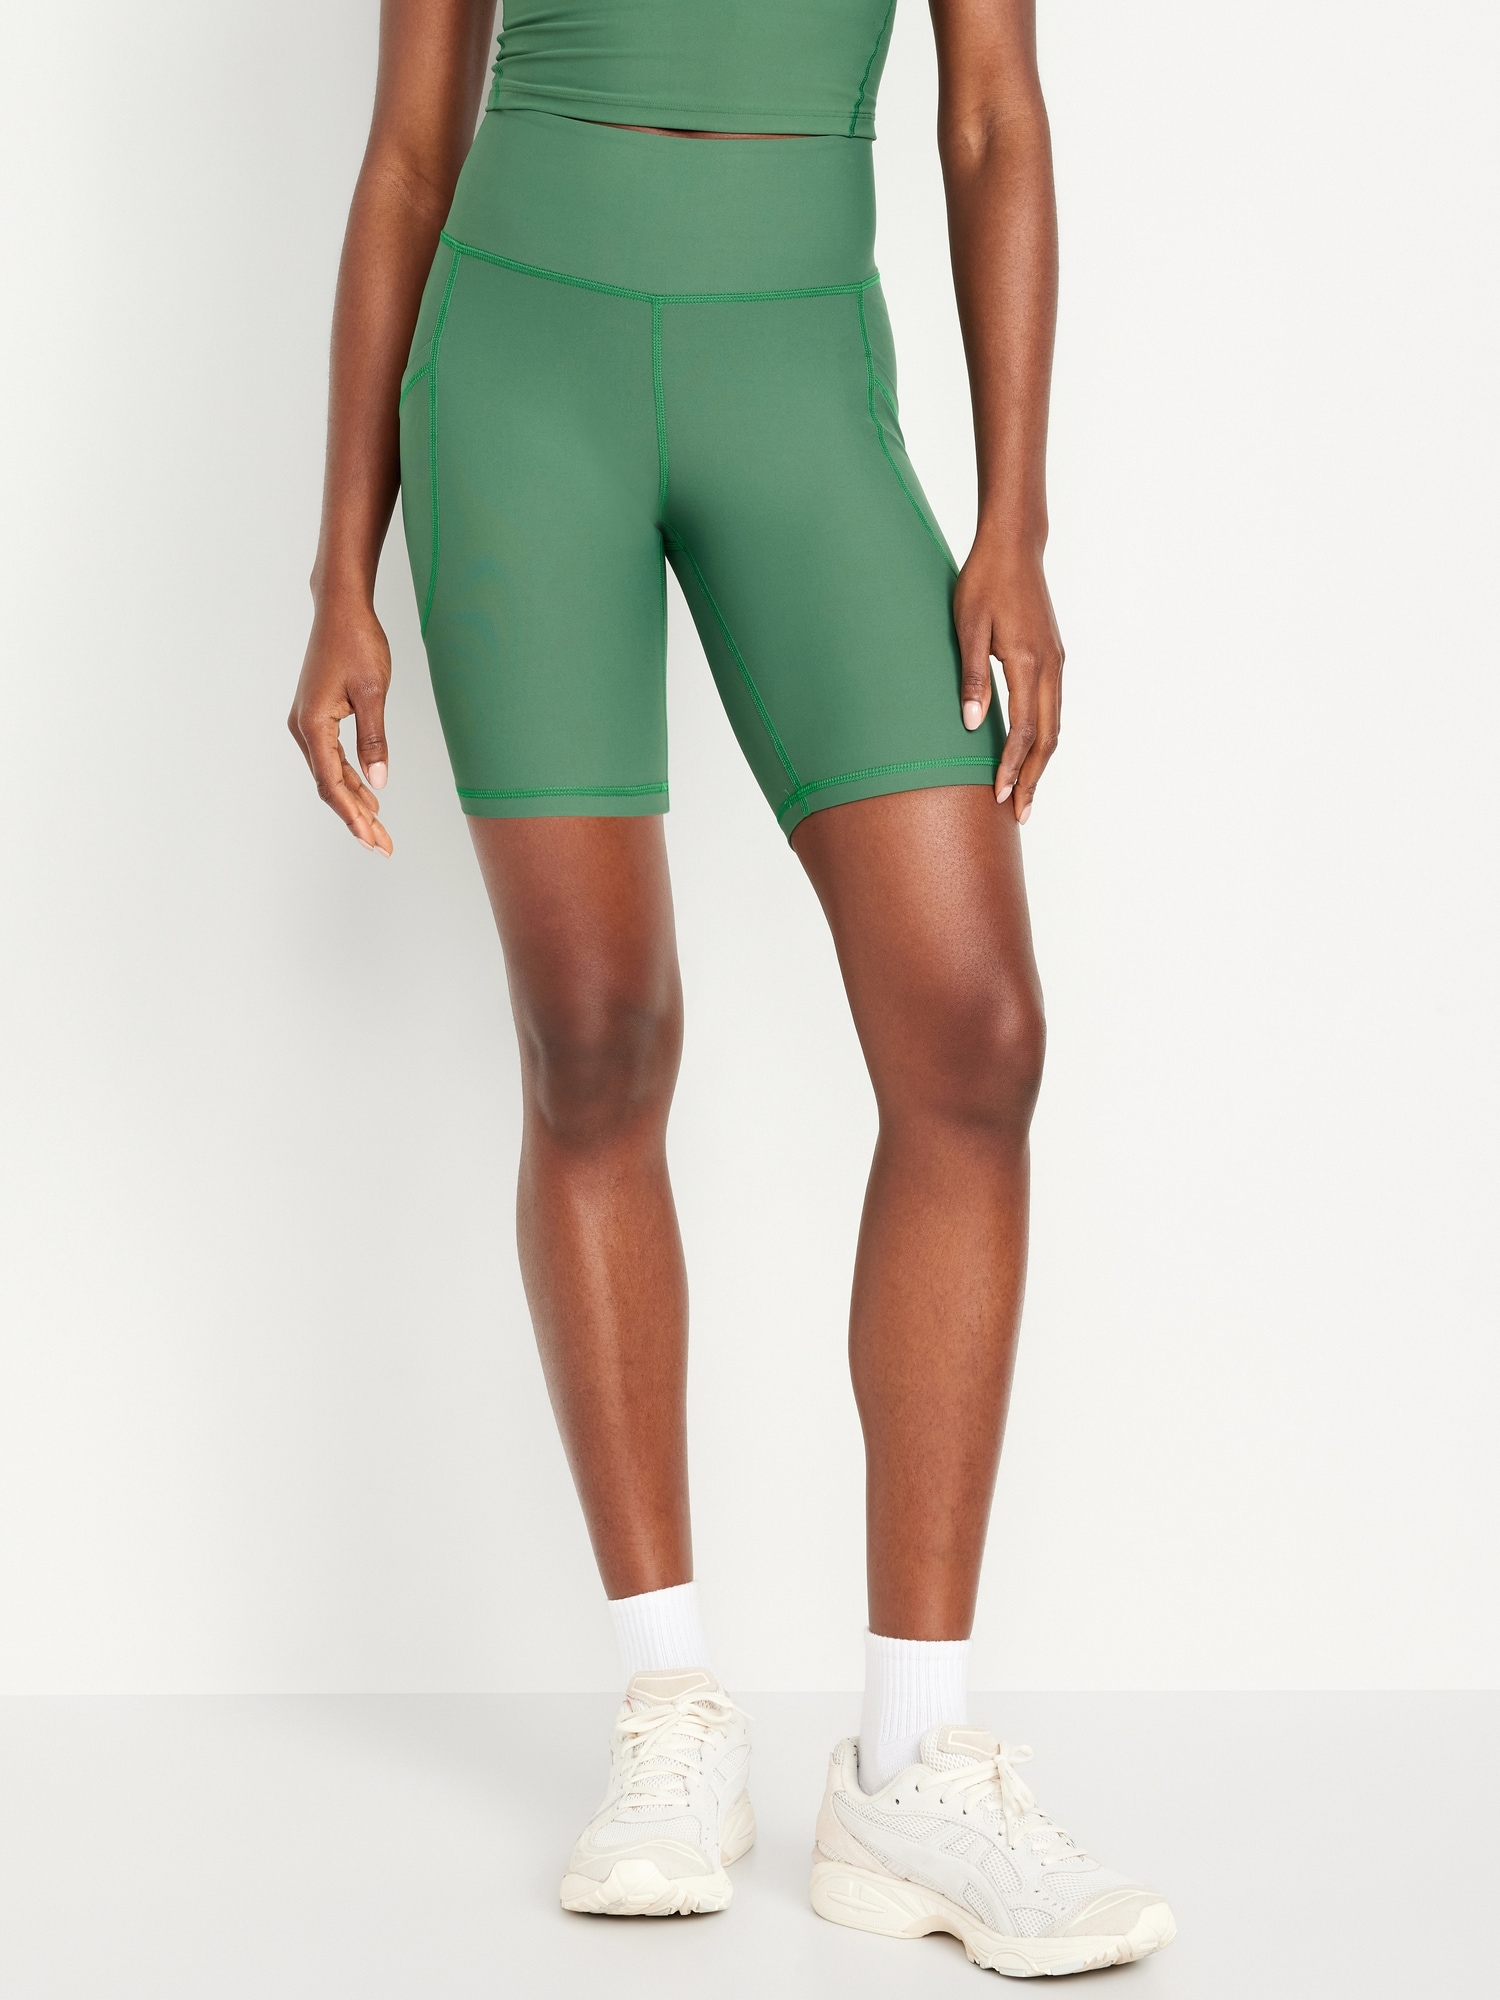 High-Waisted PowerSoft Biker Shorts -- 8-inch inseam